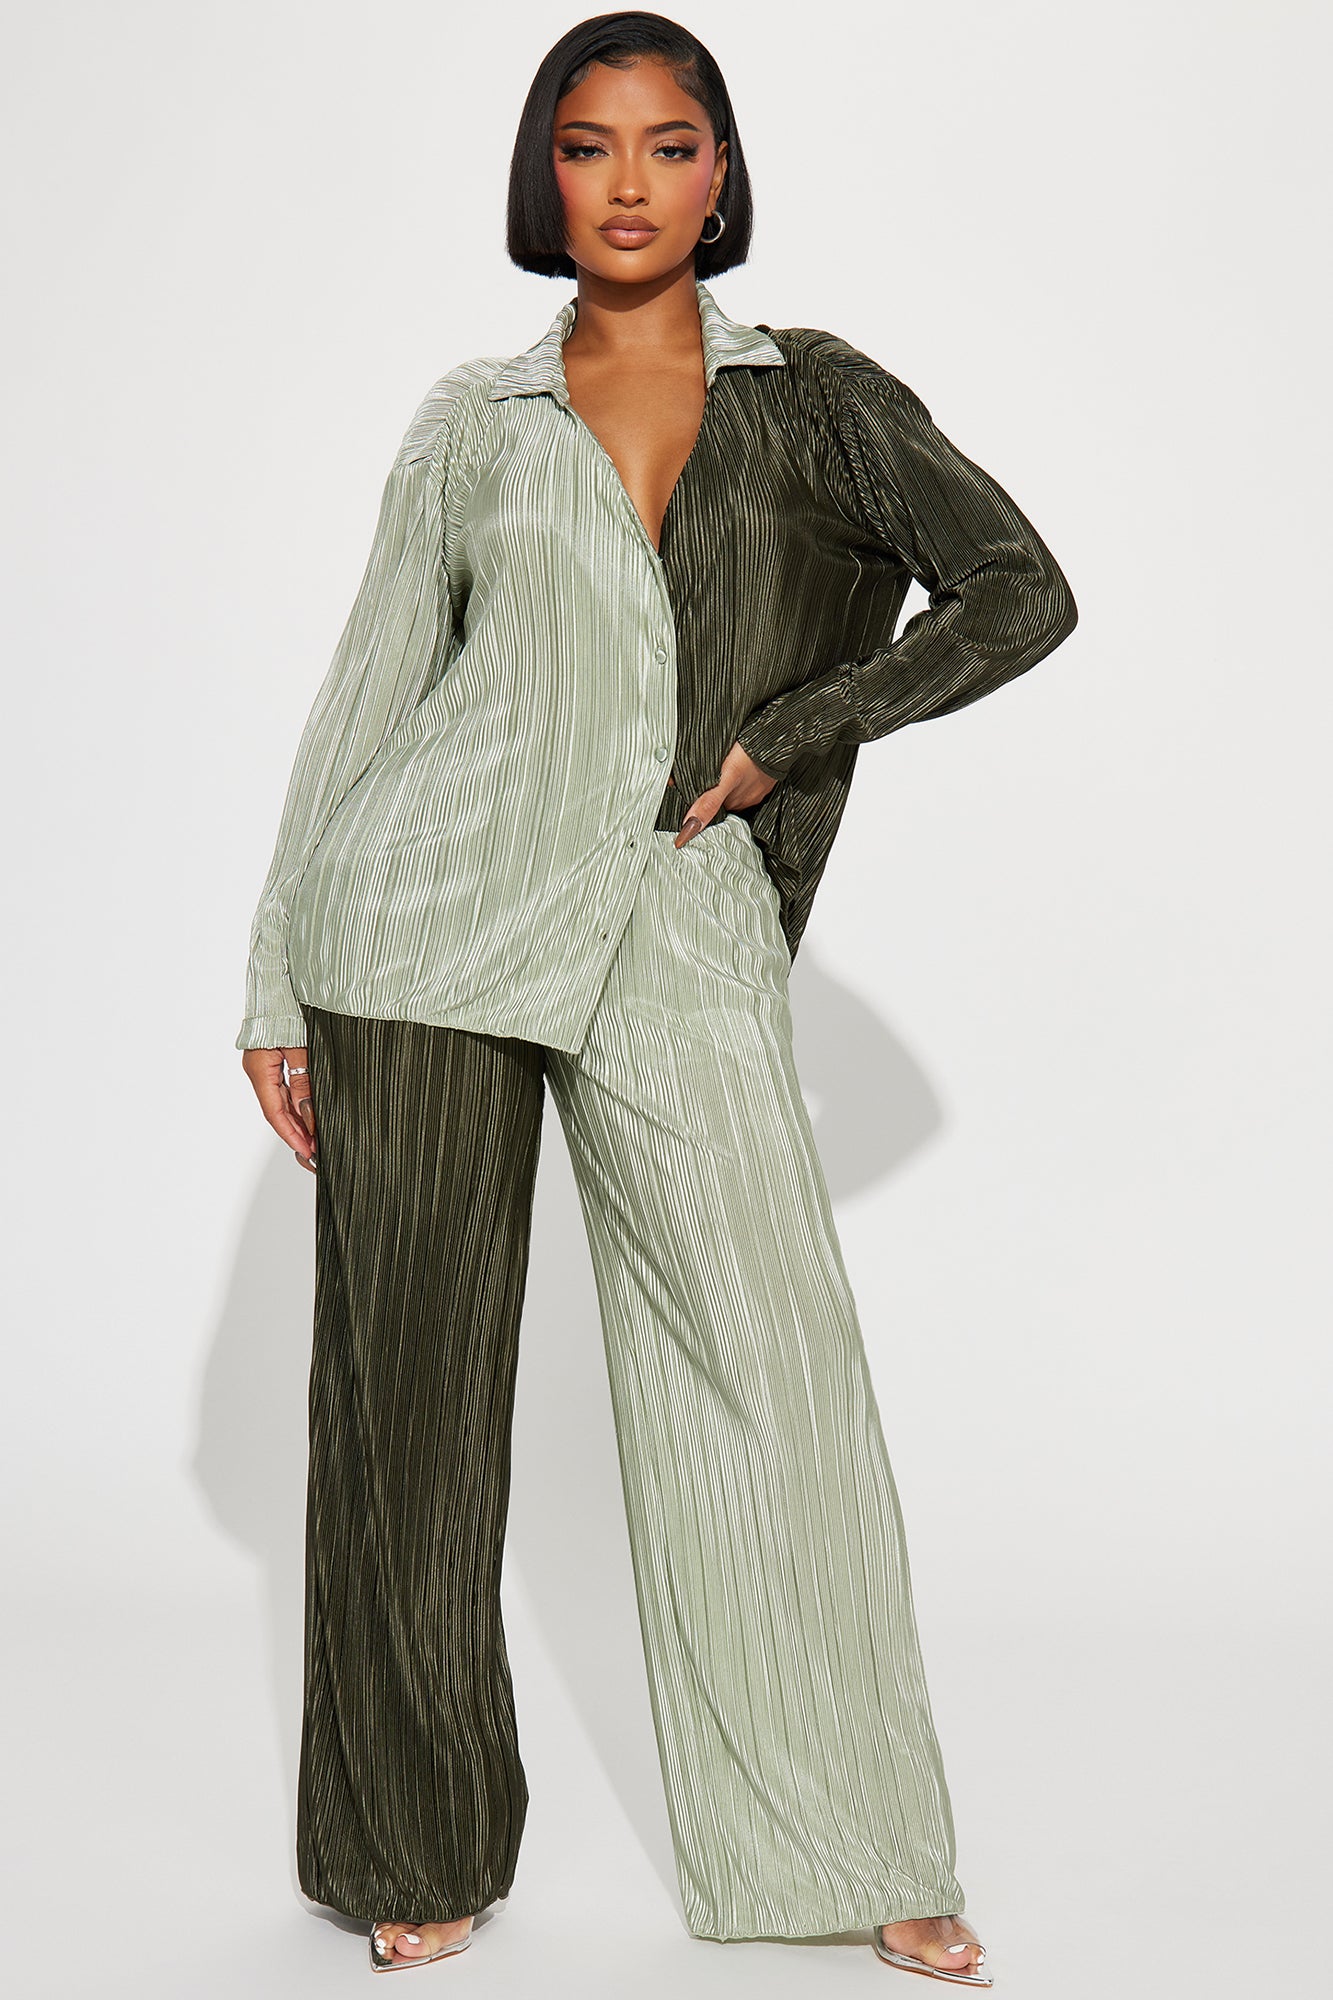 Waverly Pant Set - Olive, Fashion Nova, Matching Sets